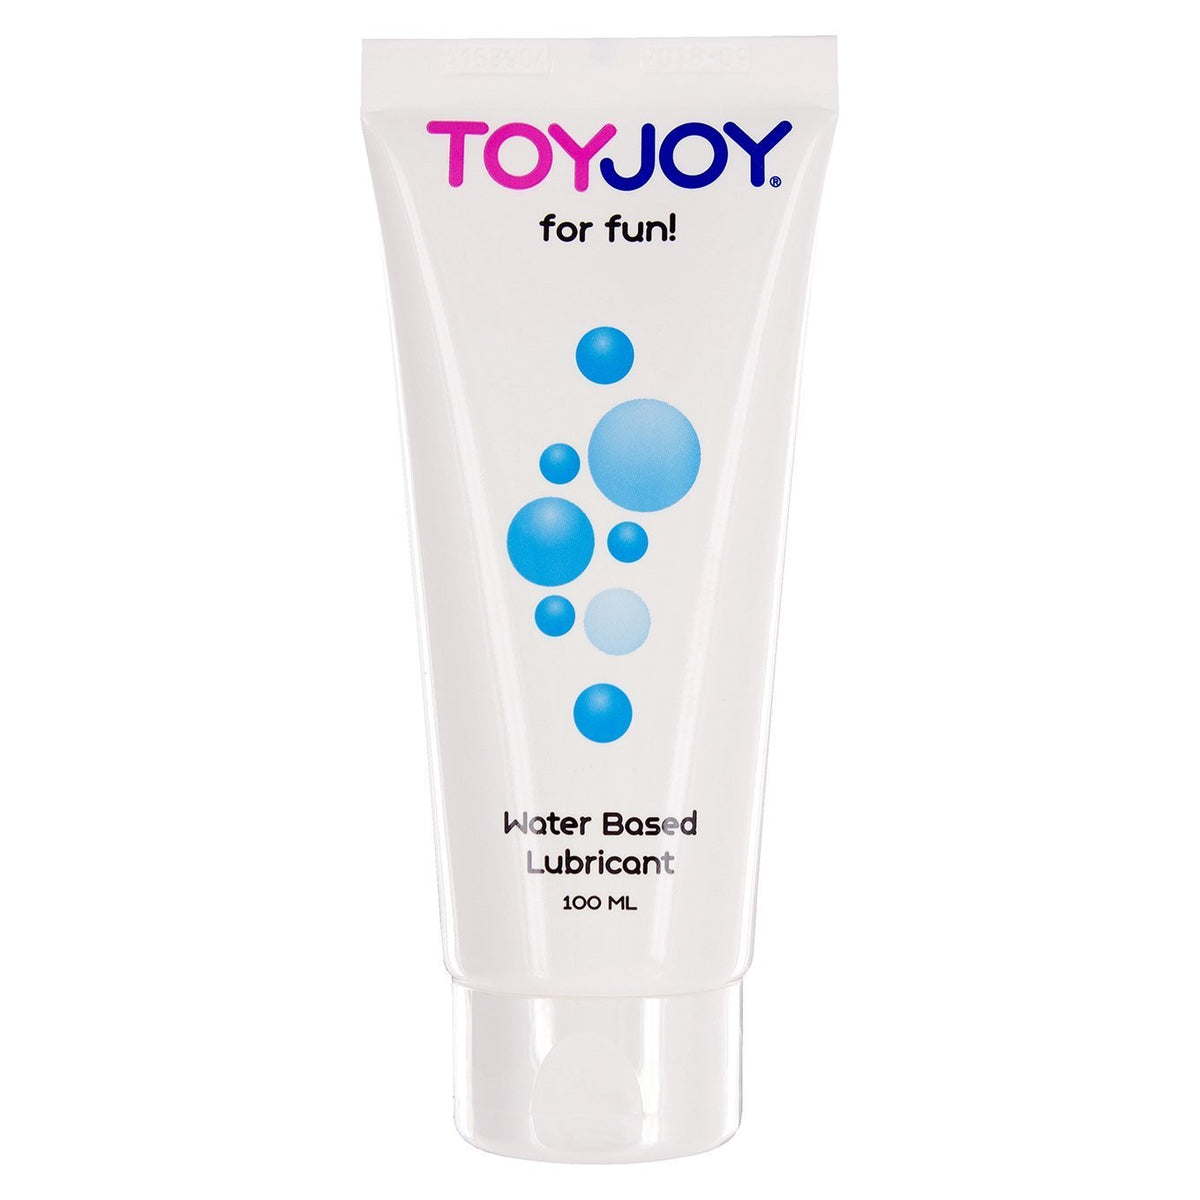 ToyJoy - Waterbased Lubricant 100 ml (Lube) -  Lube (Water Based)  Durio.sg